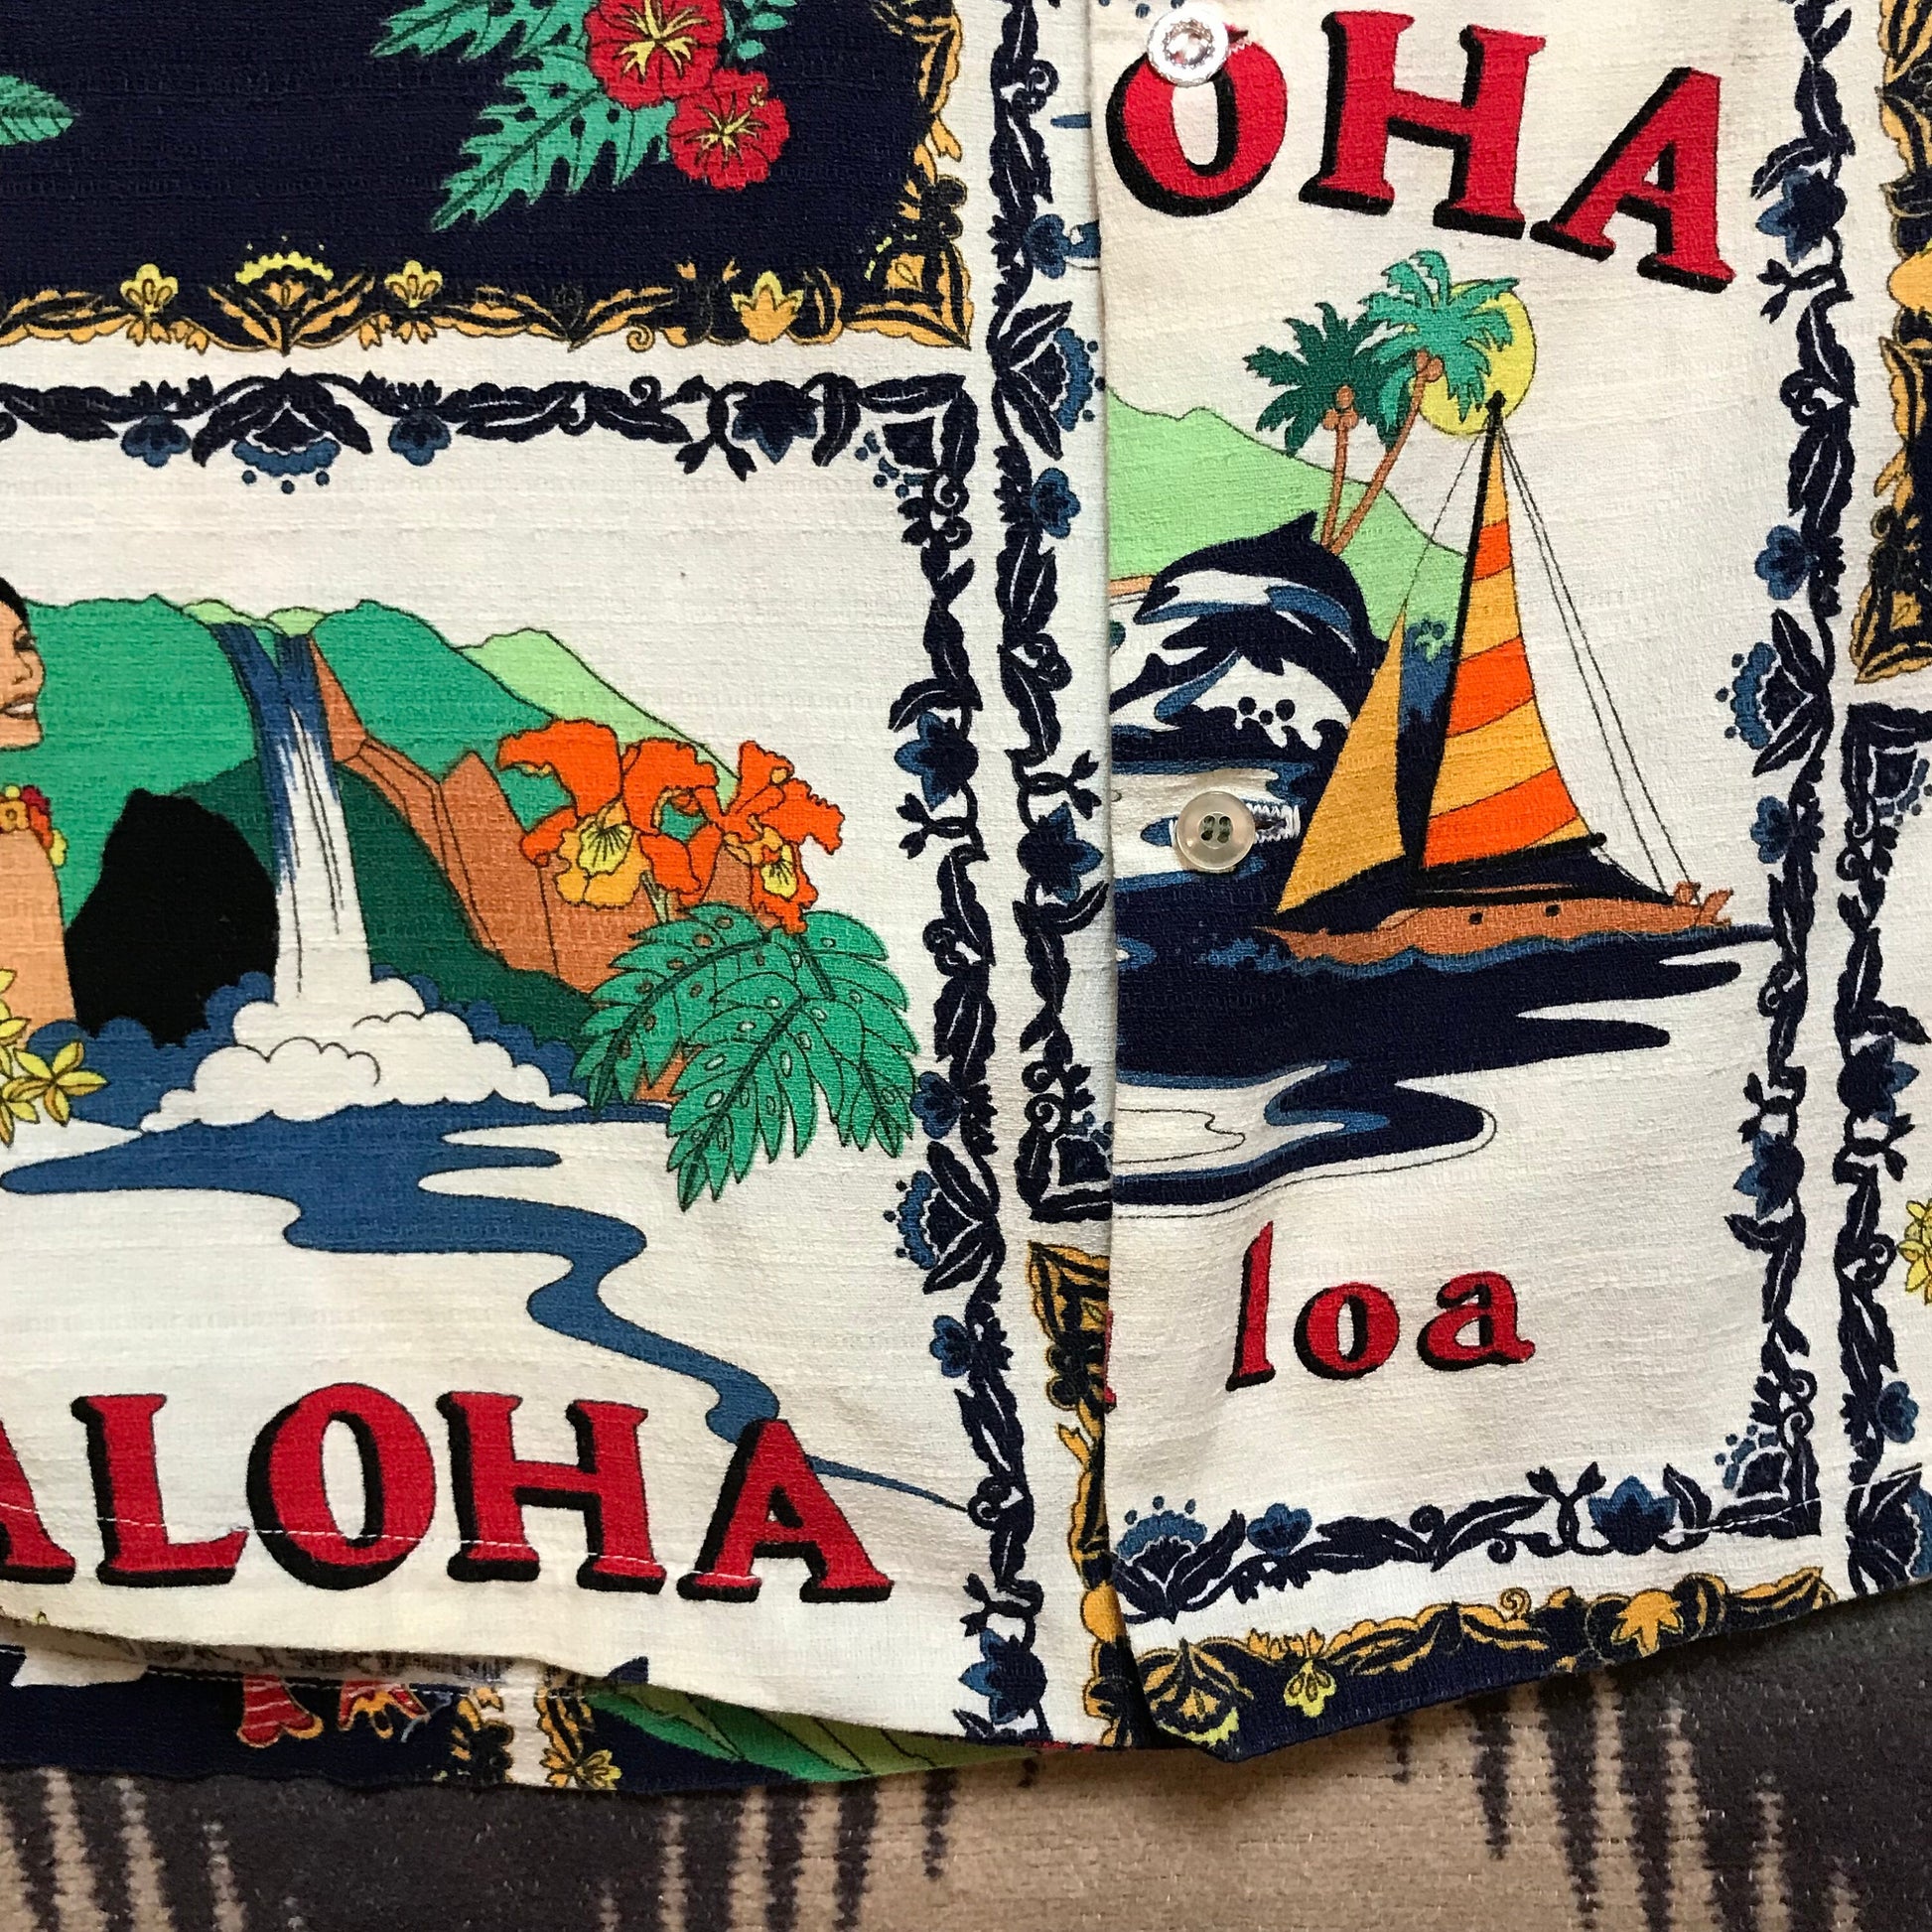 1960s/1970s Garment Factory to You Aloha Novelty Souvenir Print Made in Hawaii Hawaiian Shirt Size L/XL